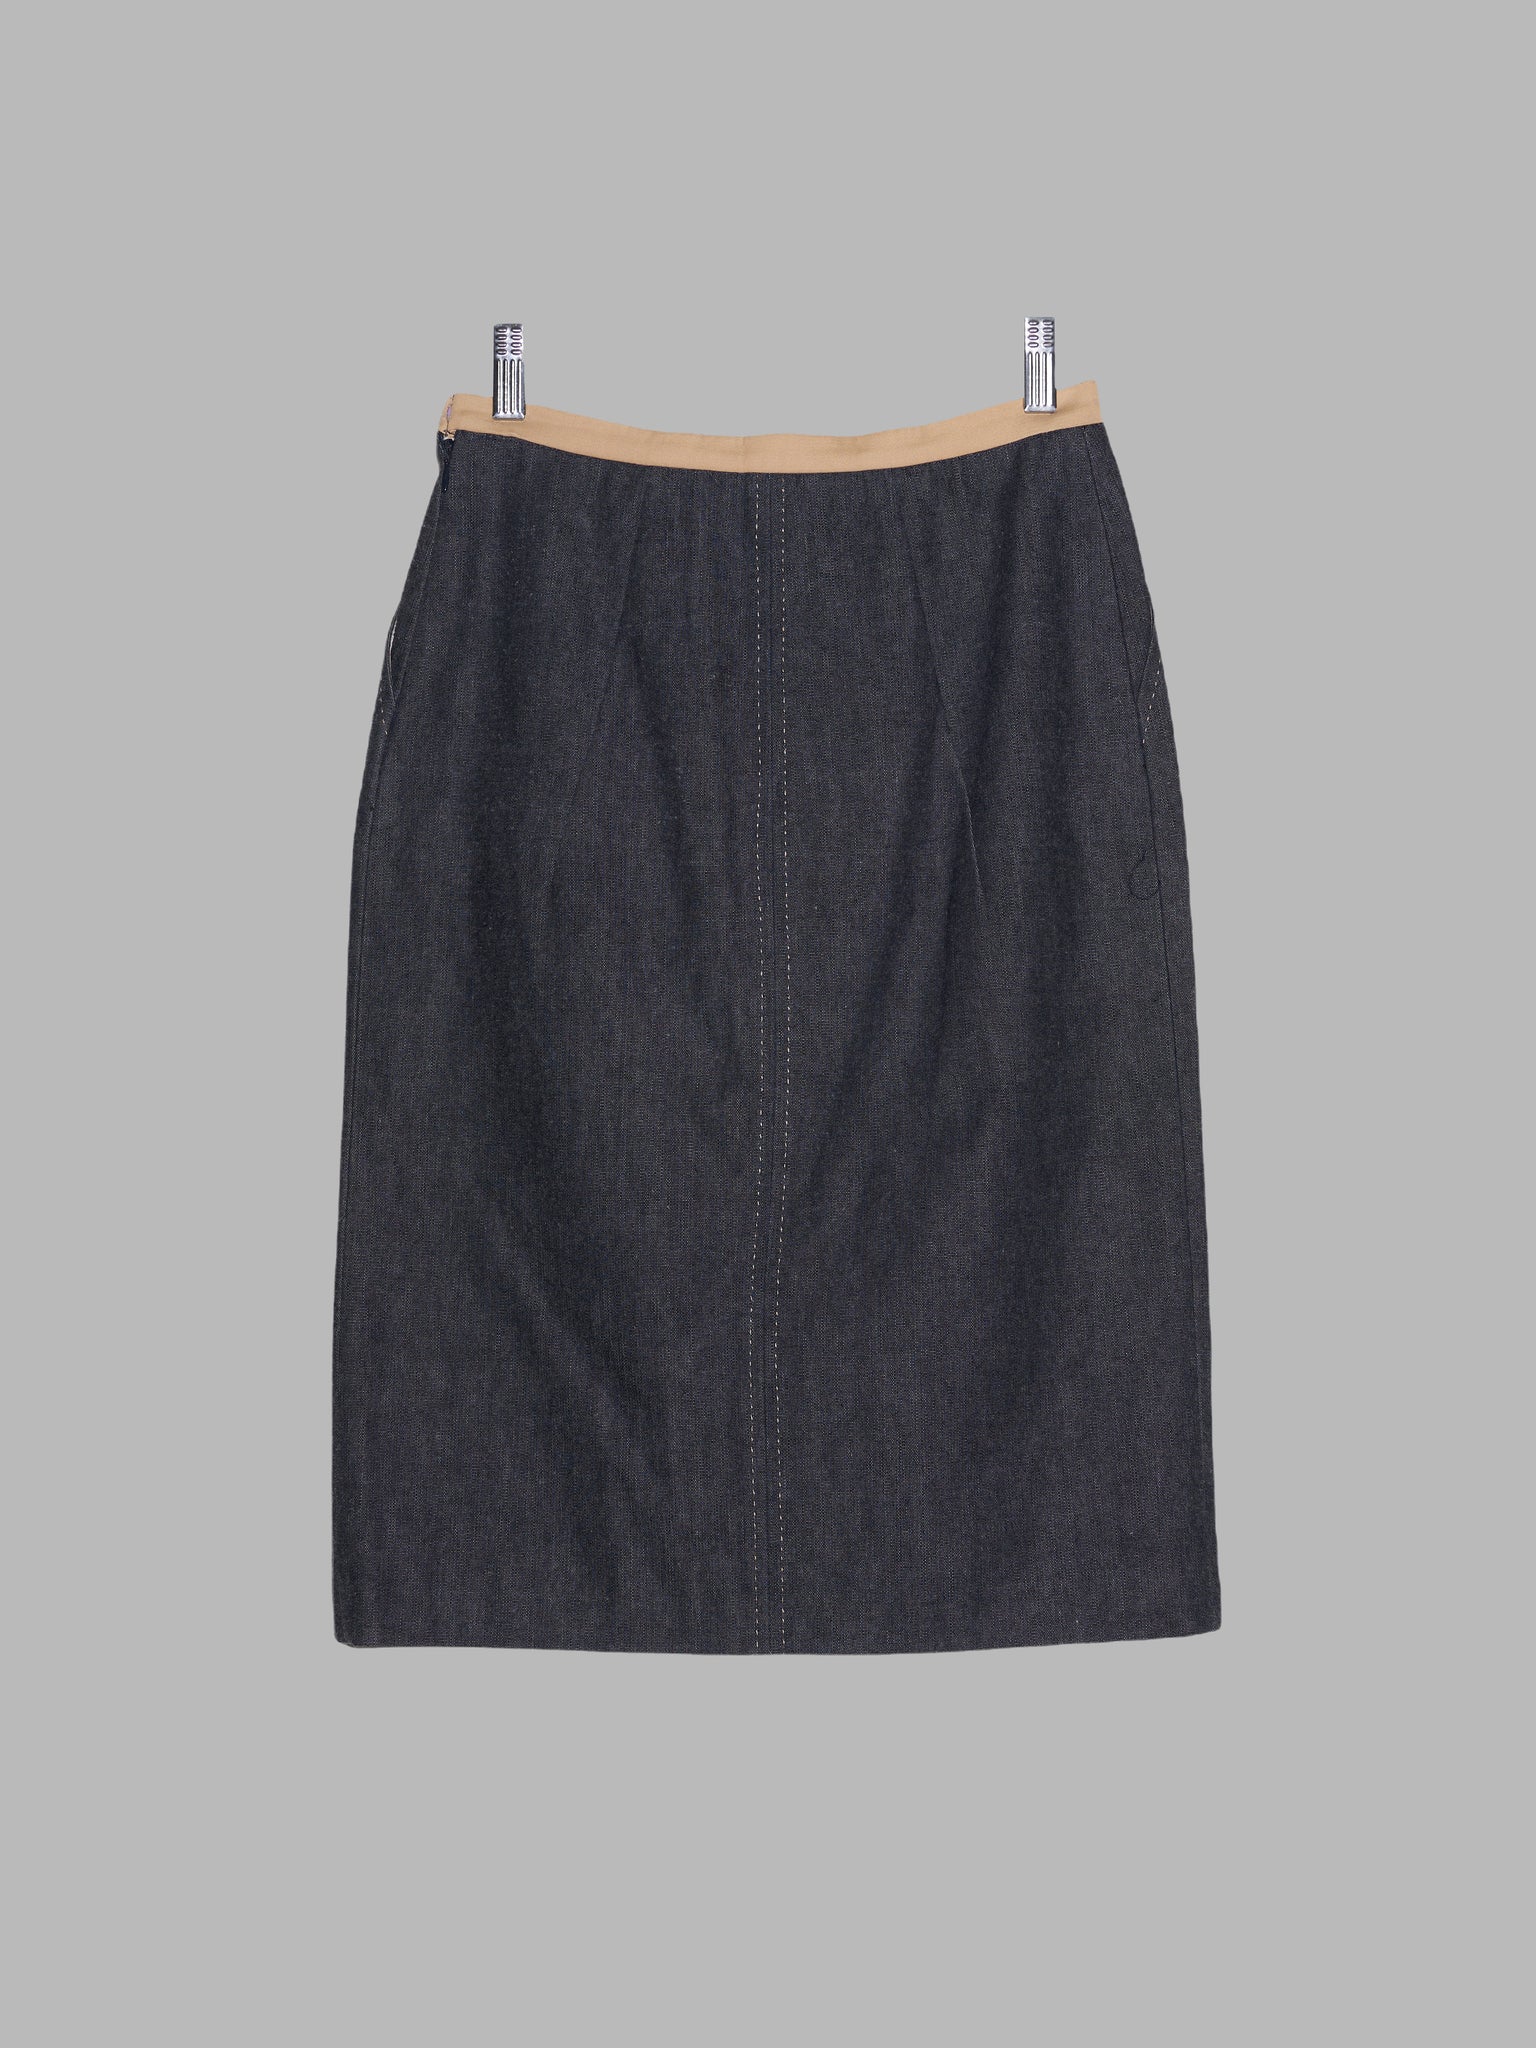 Alessandro dell'Acqua grey denim contrast waistband pencil skirt - IT 40